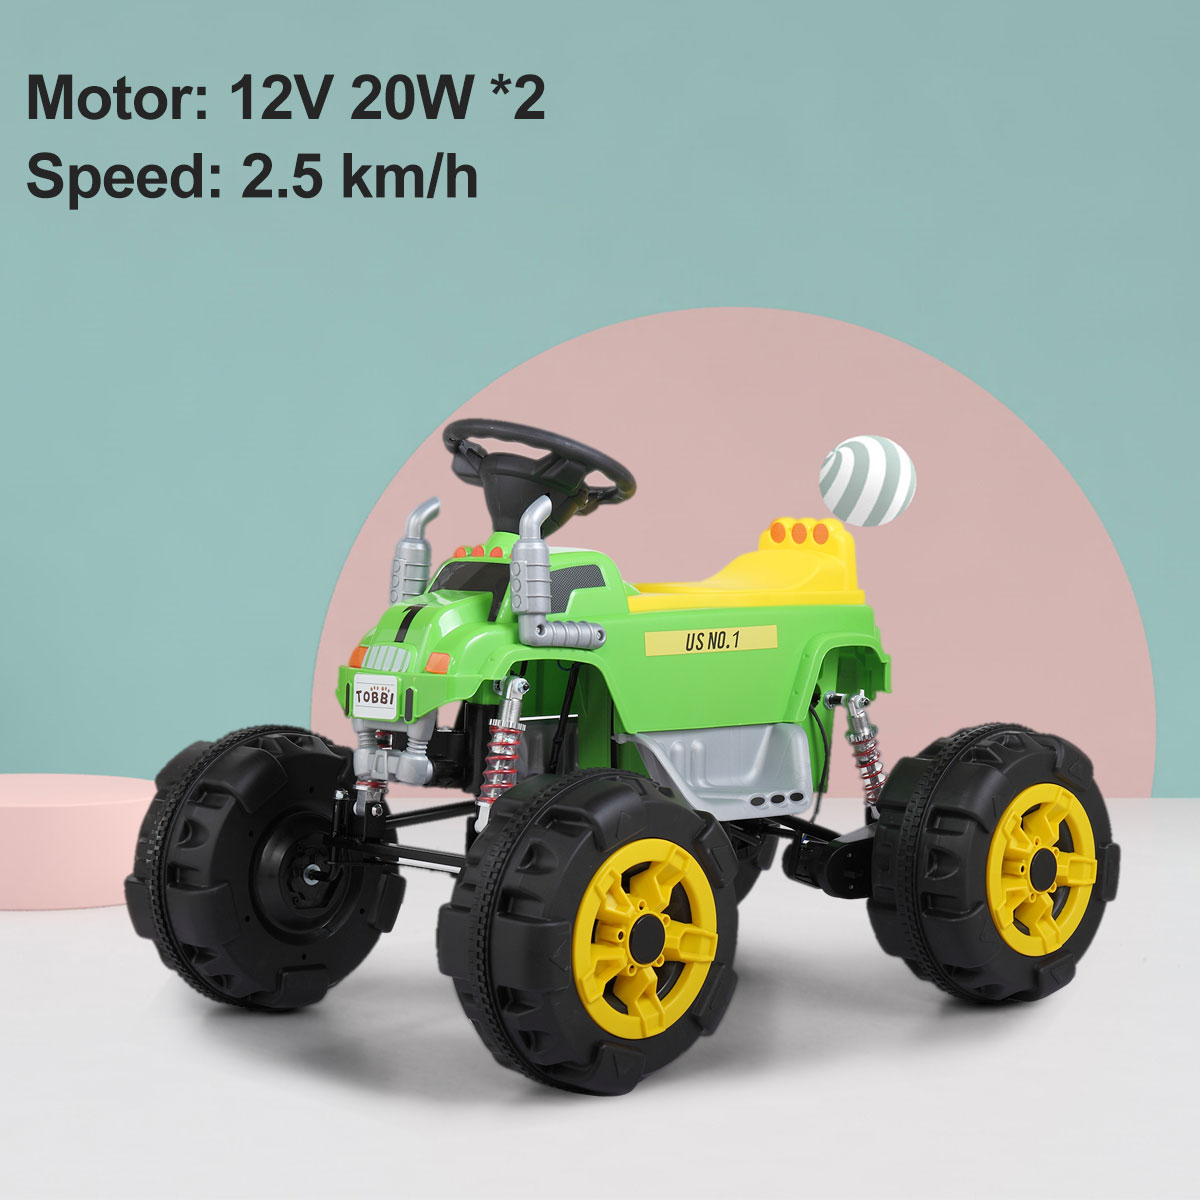 Tobbi 12V Electric Kids Ride On ATV Quad Wheel Vehicle with Spring Suspension